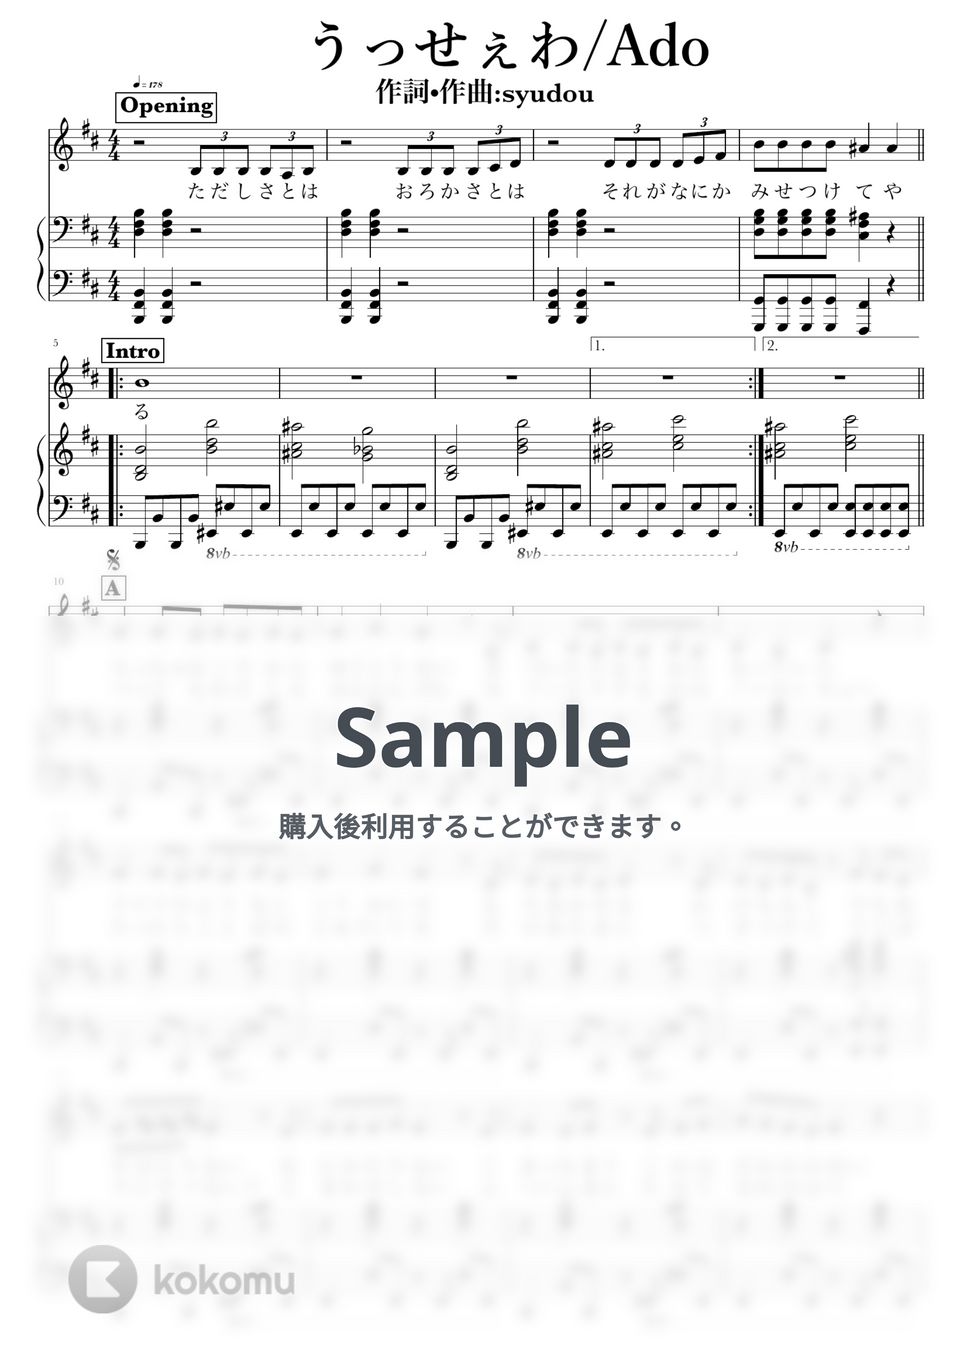 Ado - うっせぇわ by NOTES music